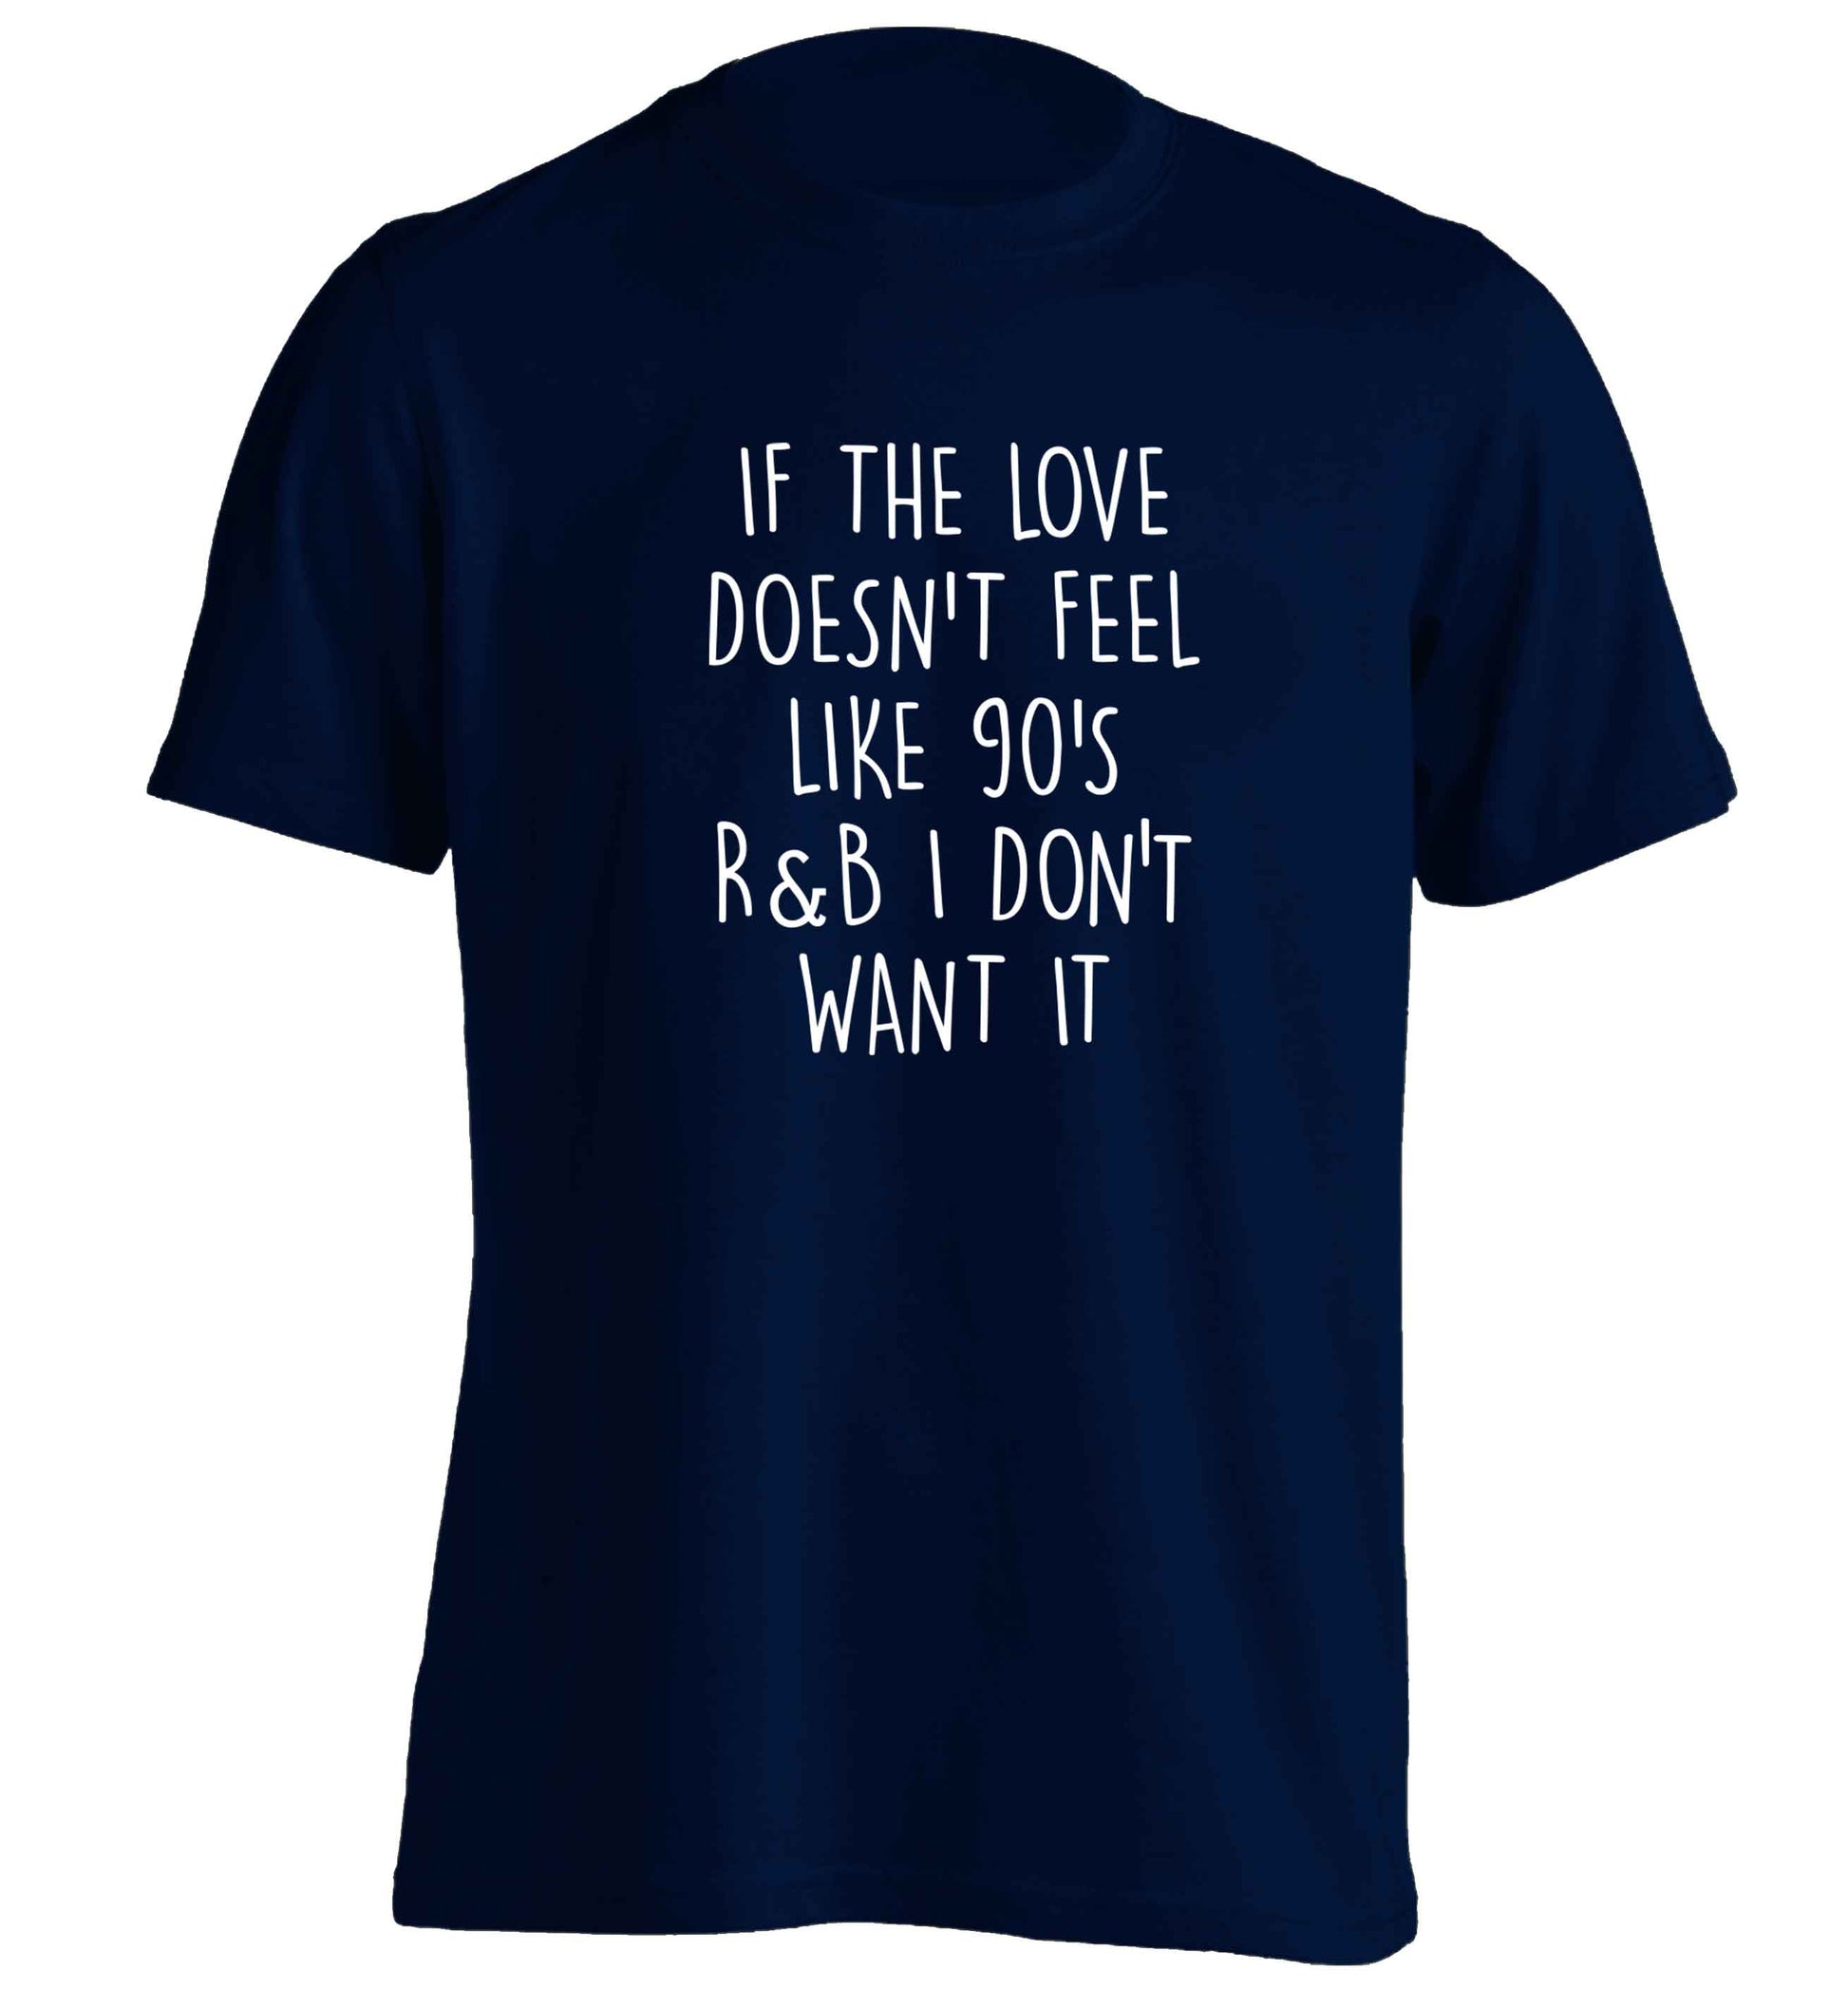 If the love doesn't feel like 90's r&b I don't want it adults unisex navy Tshirt 2XL